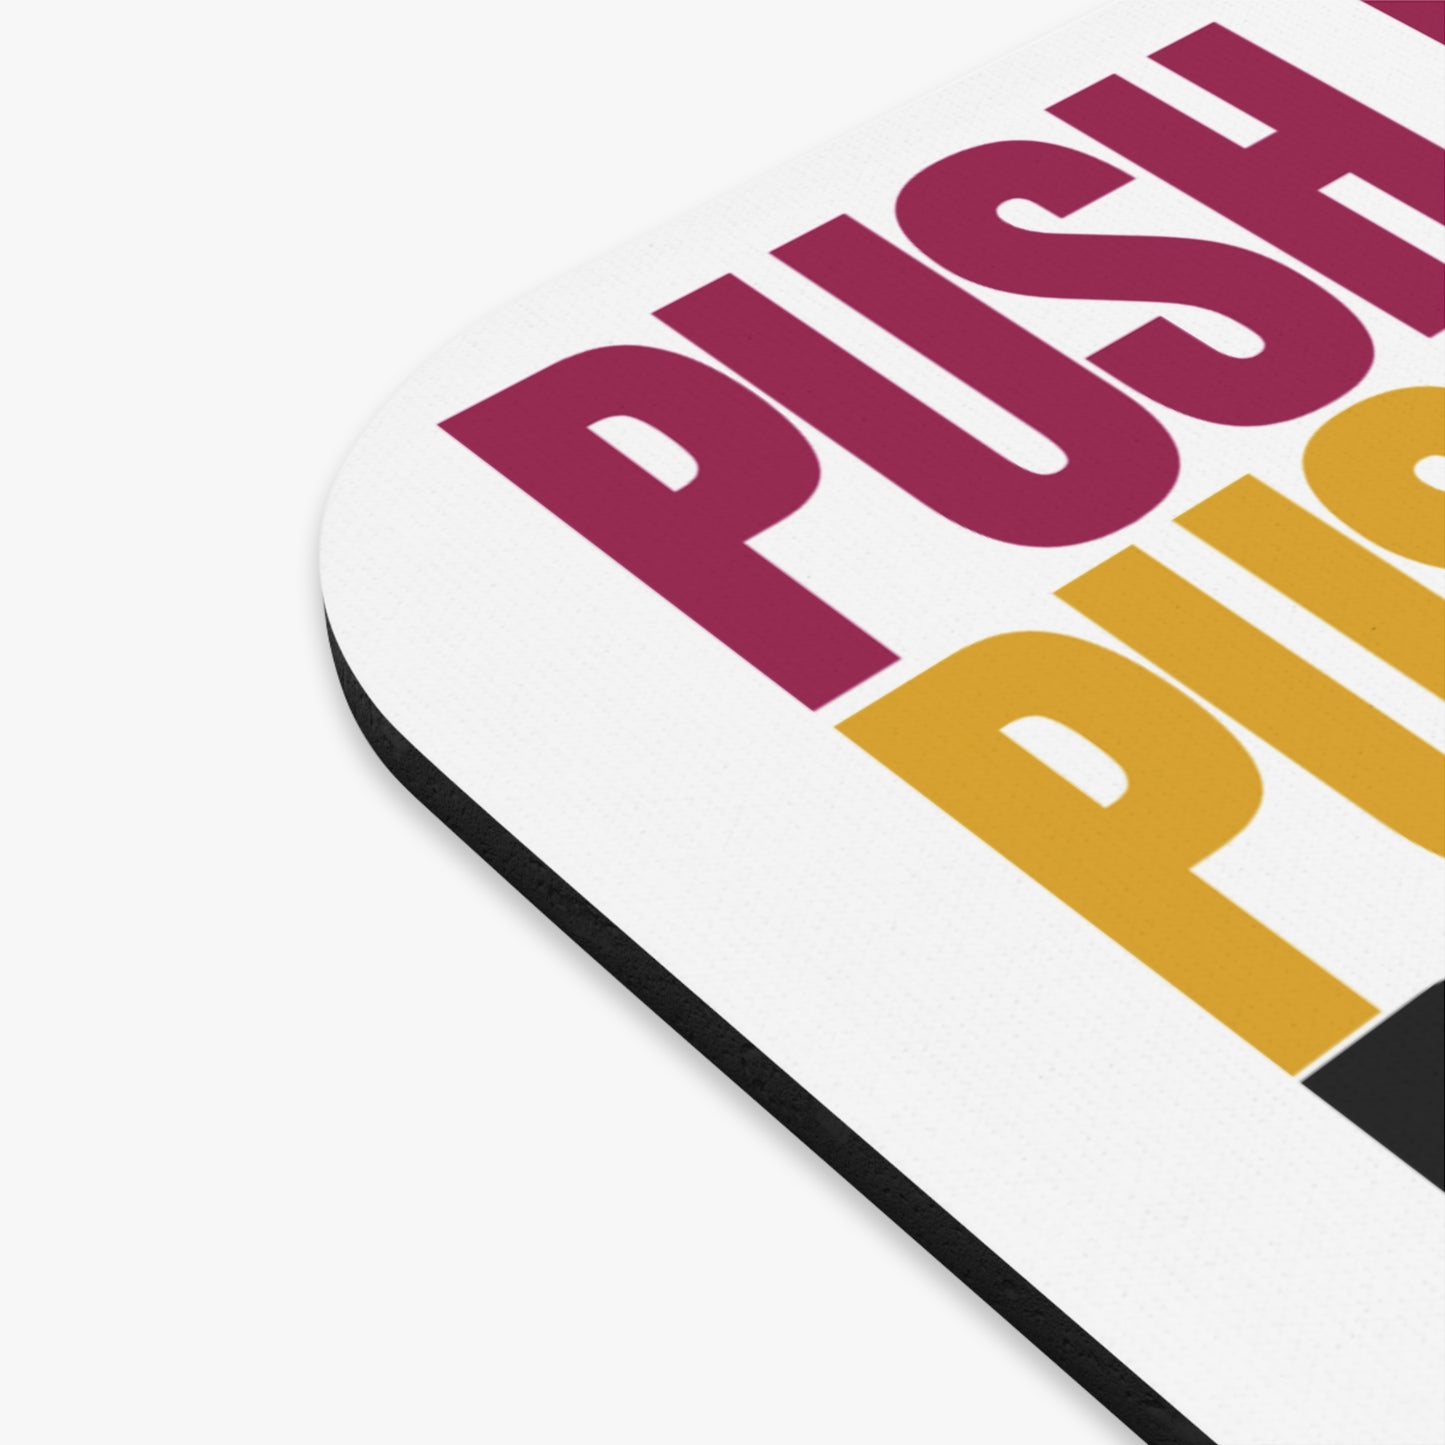 Push Power Boss Mouse Pad (Rectangle)